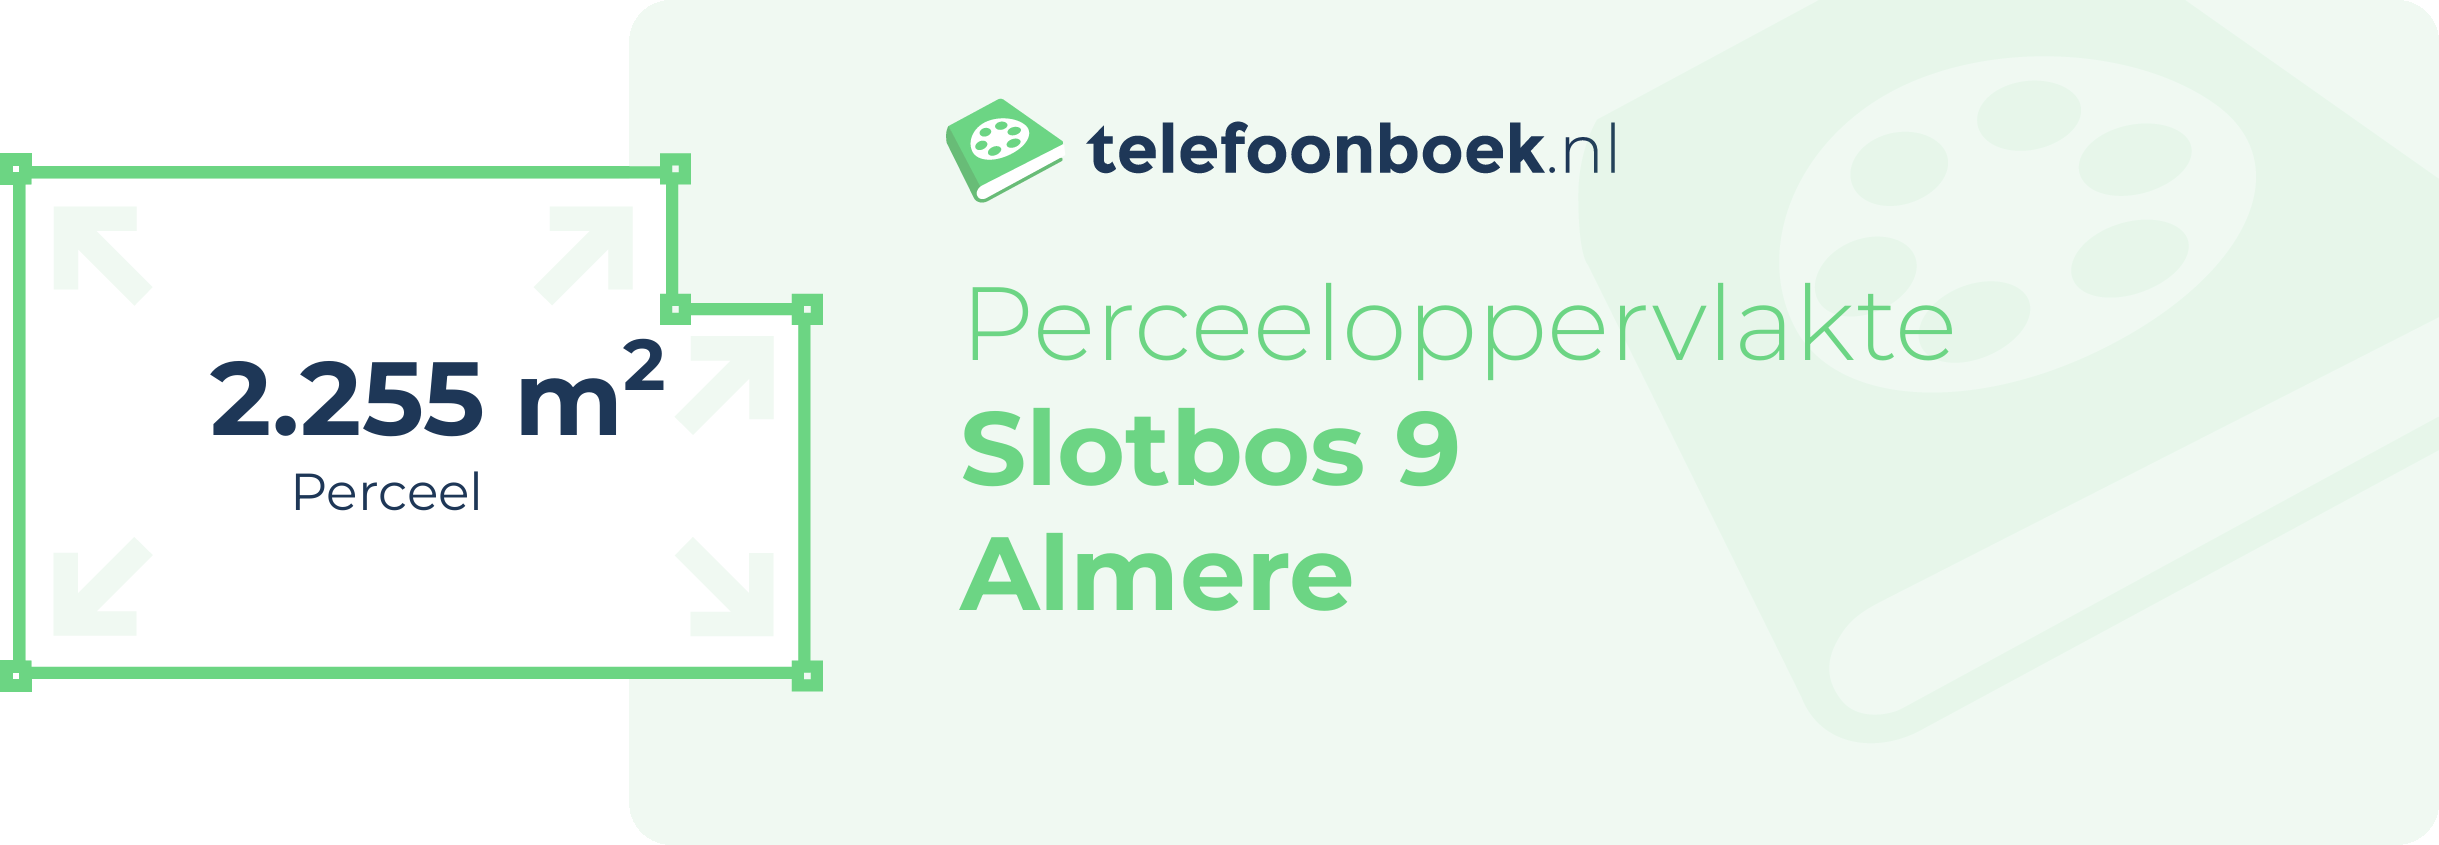 Perceeloppervlakte Slotbos 9 Almere